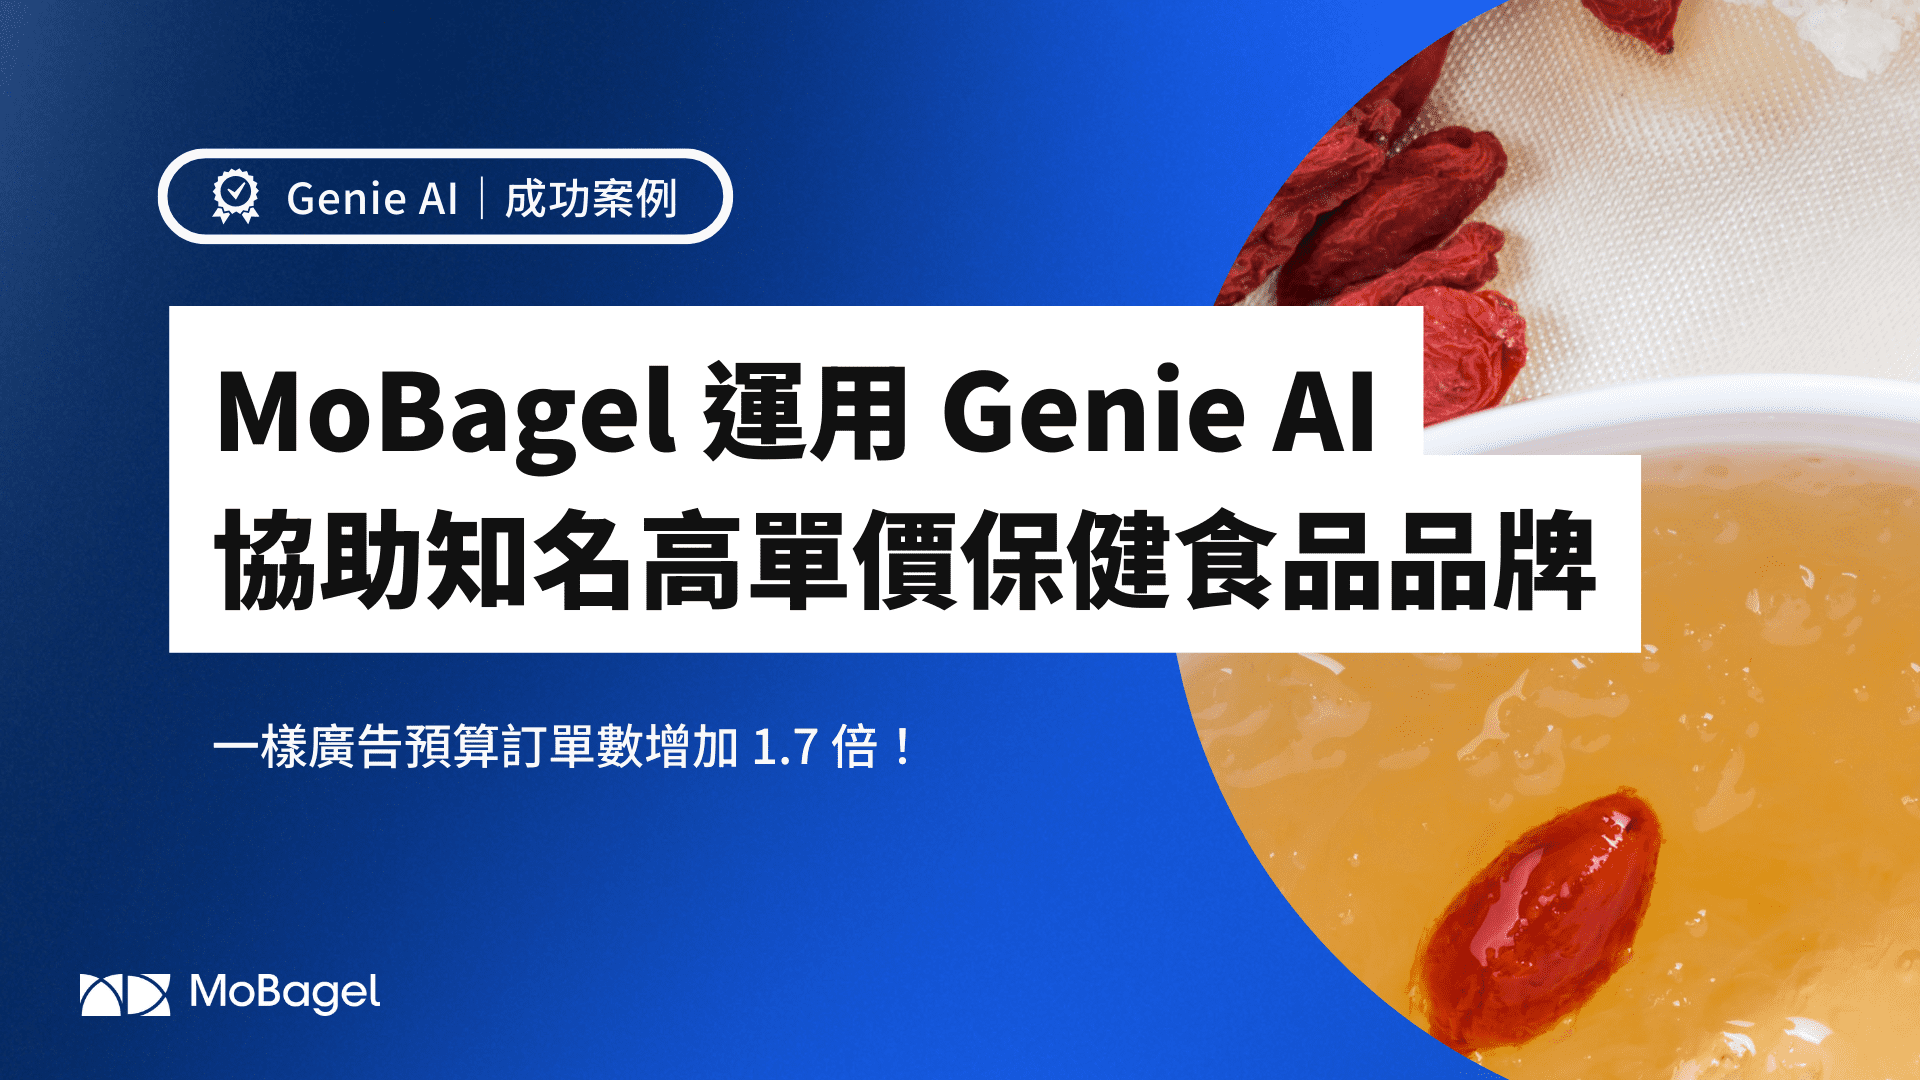 MoBagel 運用 Genie AI 協助知名高單價保健食品品牌-2